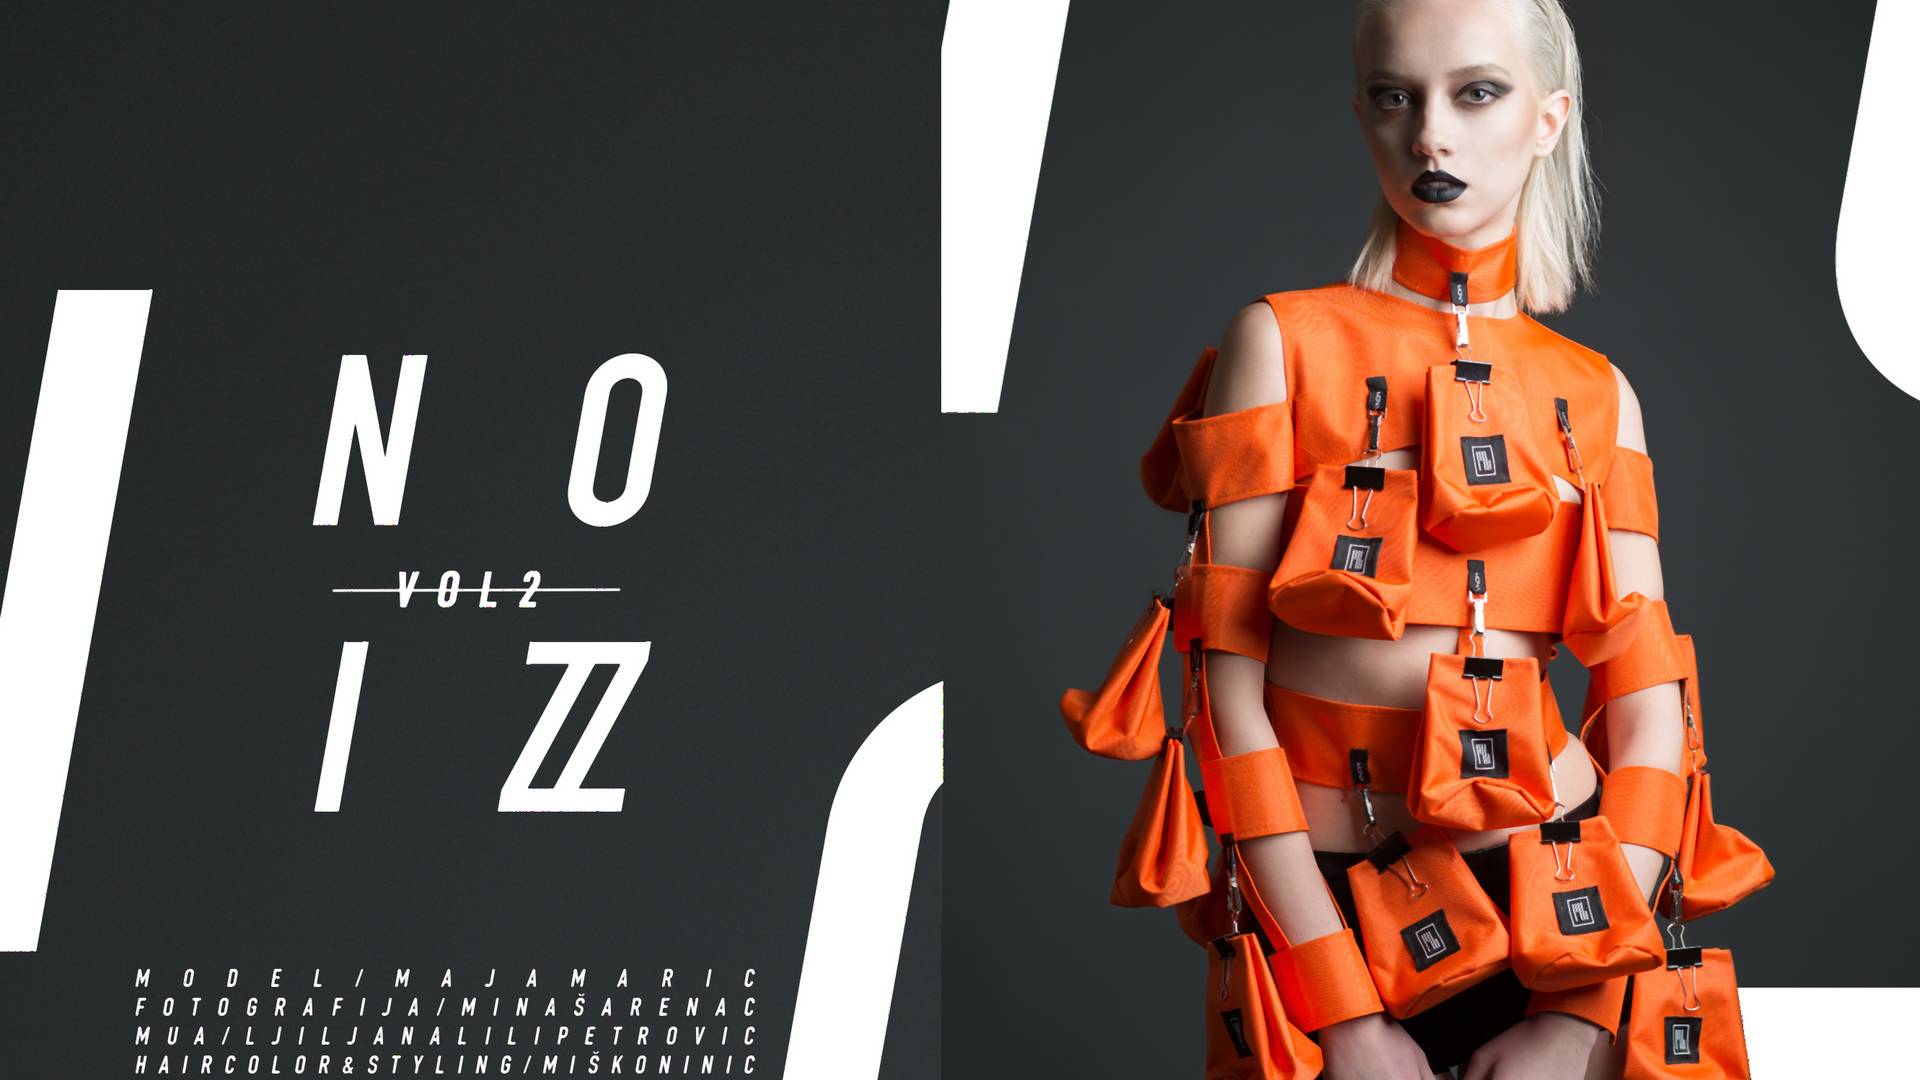 Moda koja ruši tabue - upoznajte Monu Lacko / Noizz Fashion vol.2